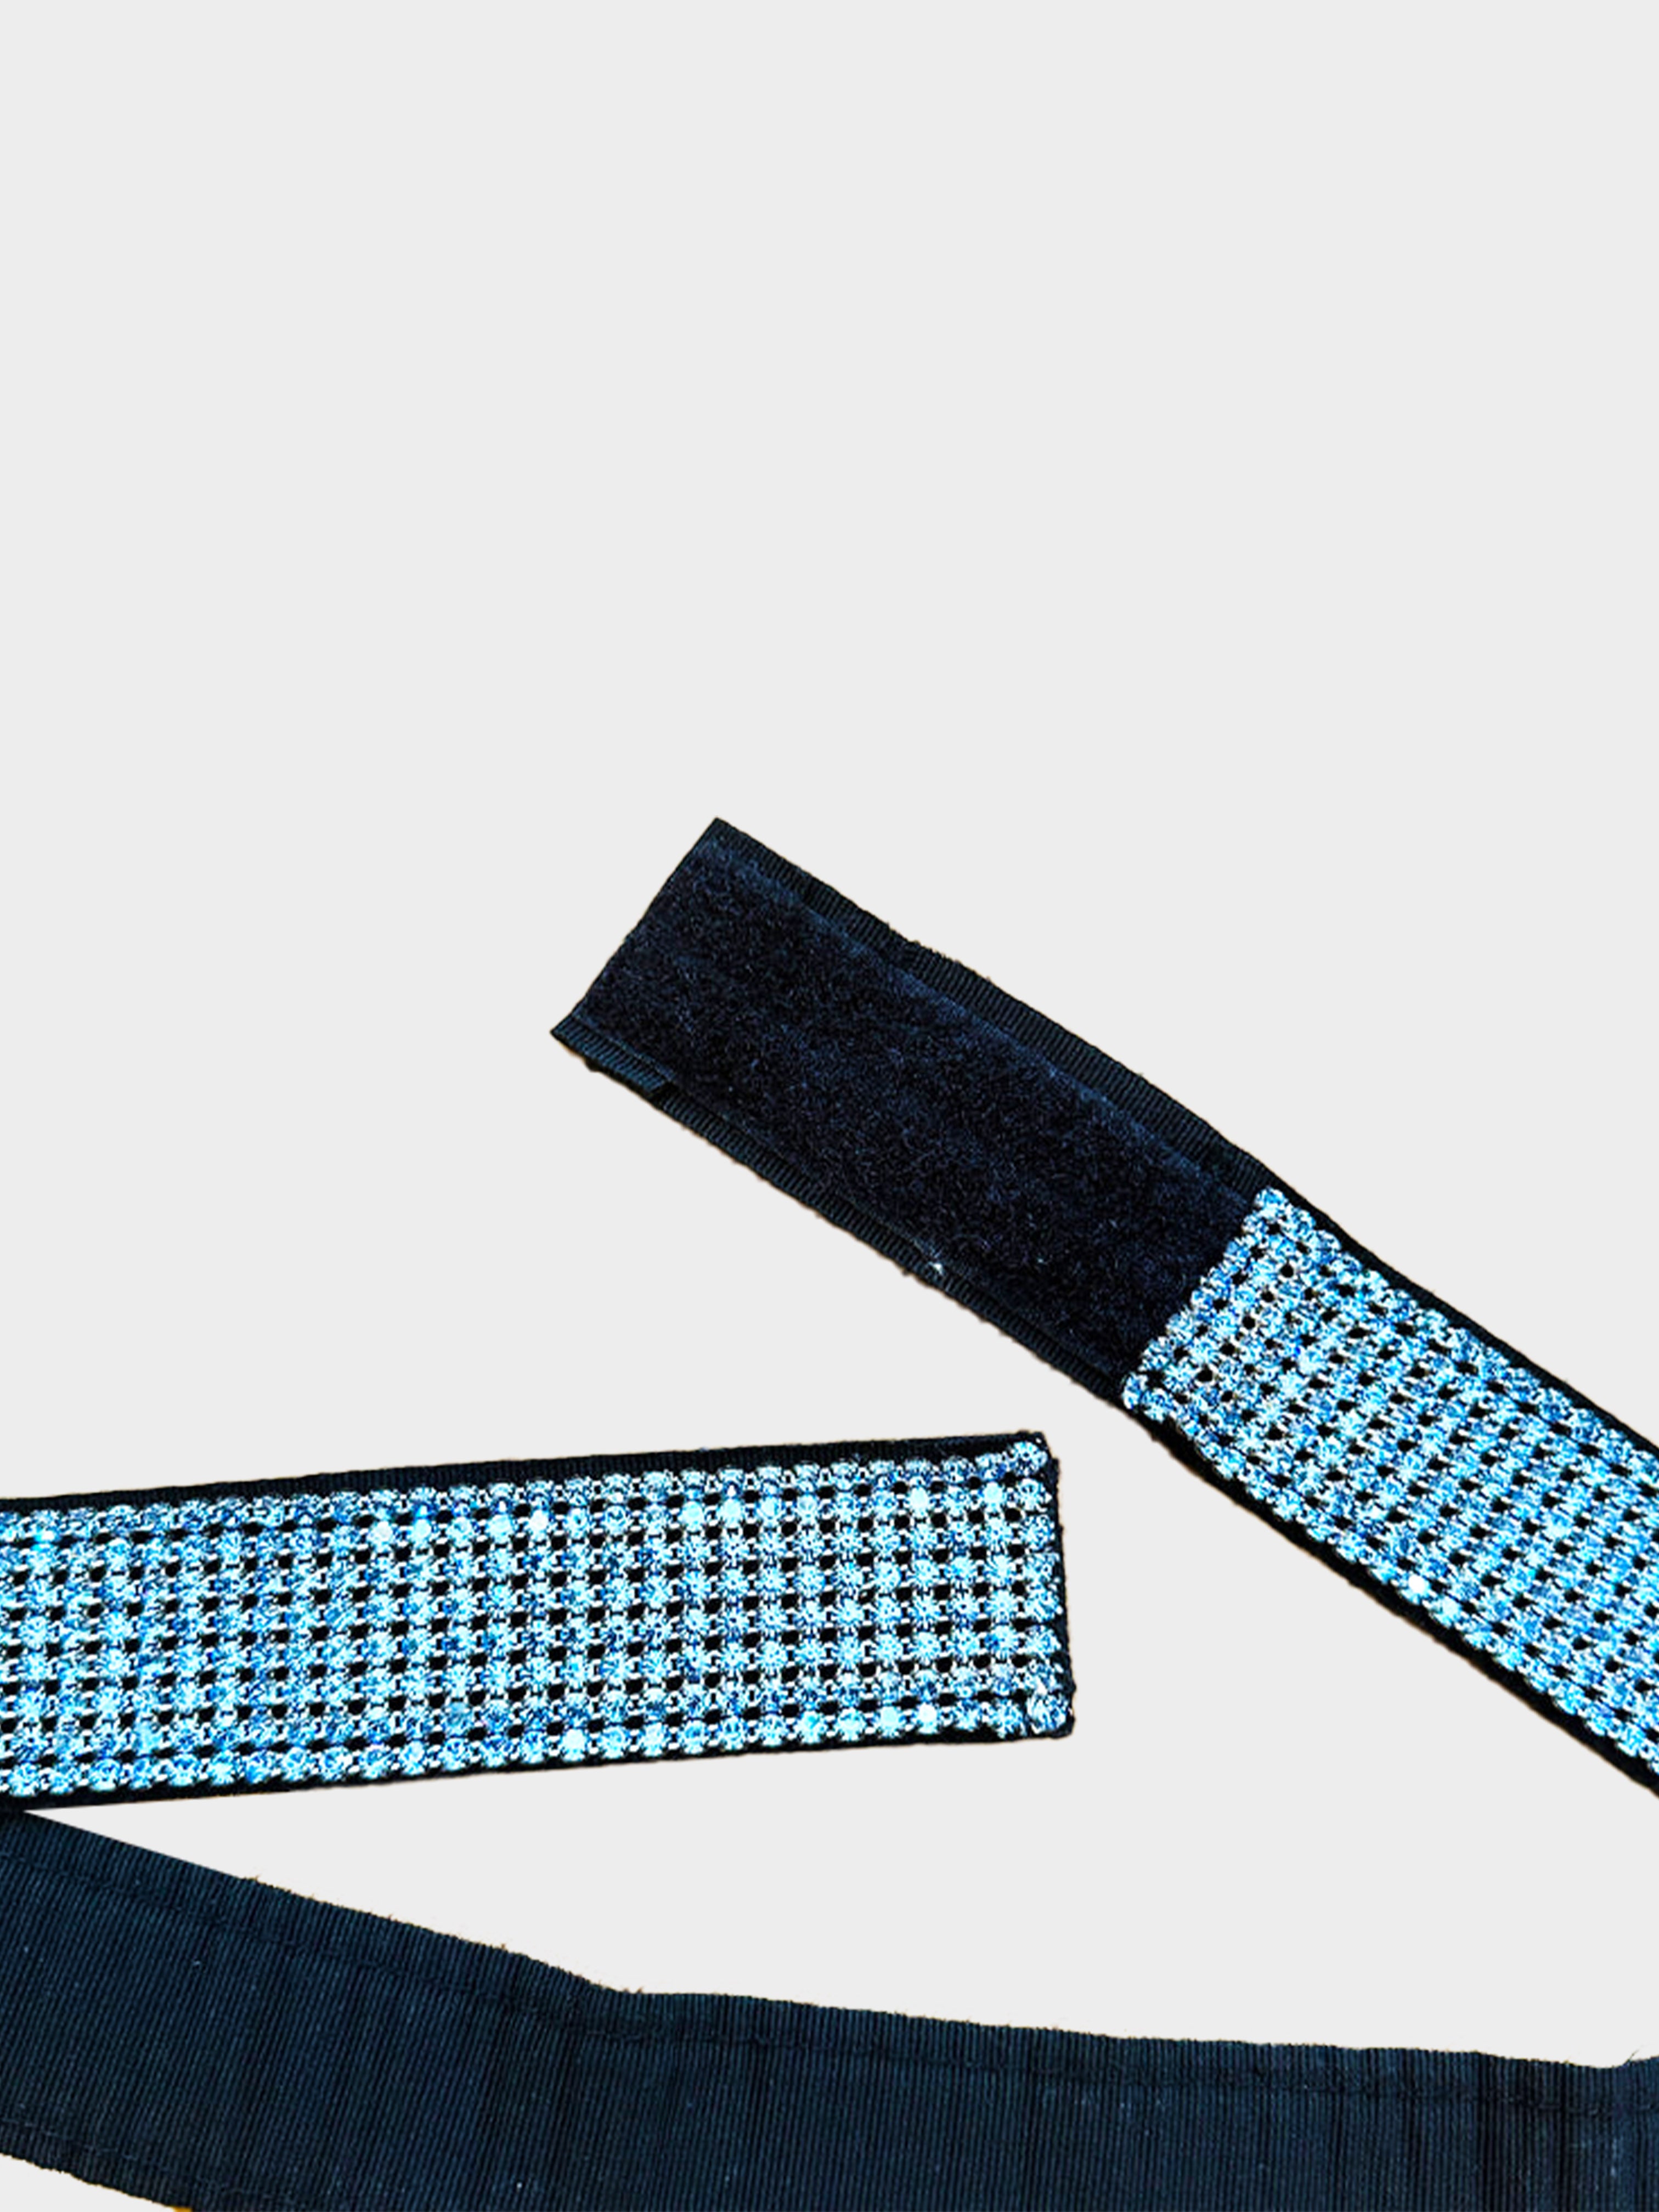 Dolce and Gabbana SS 2000 Blue Swarovski Belt